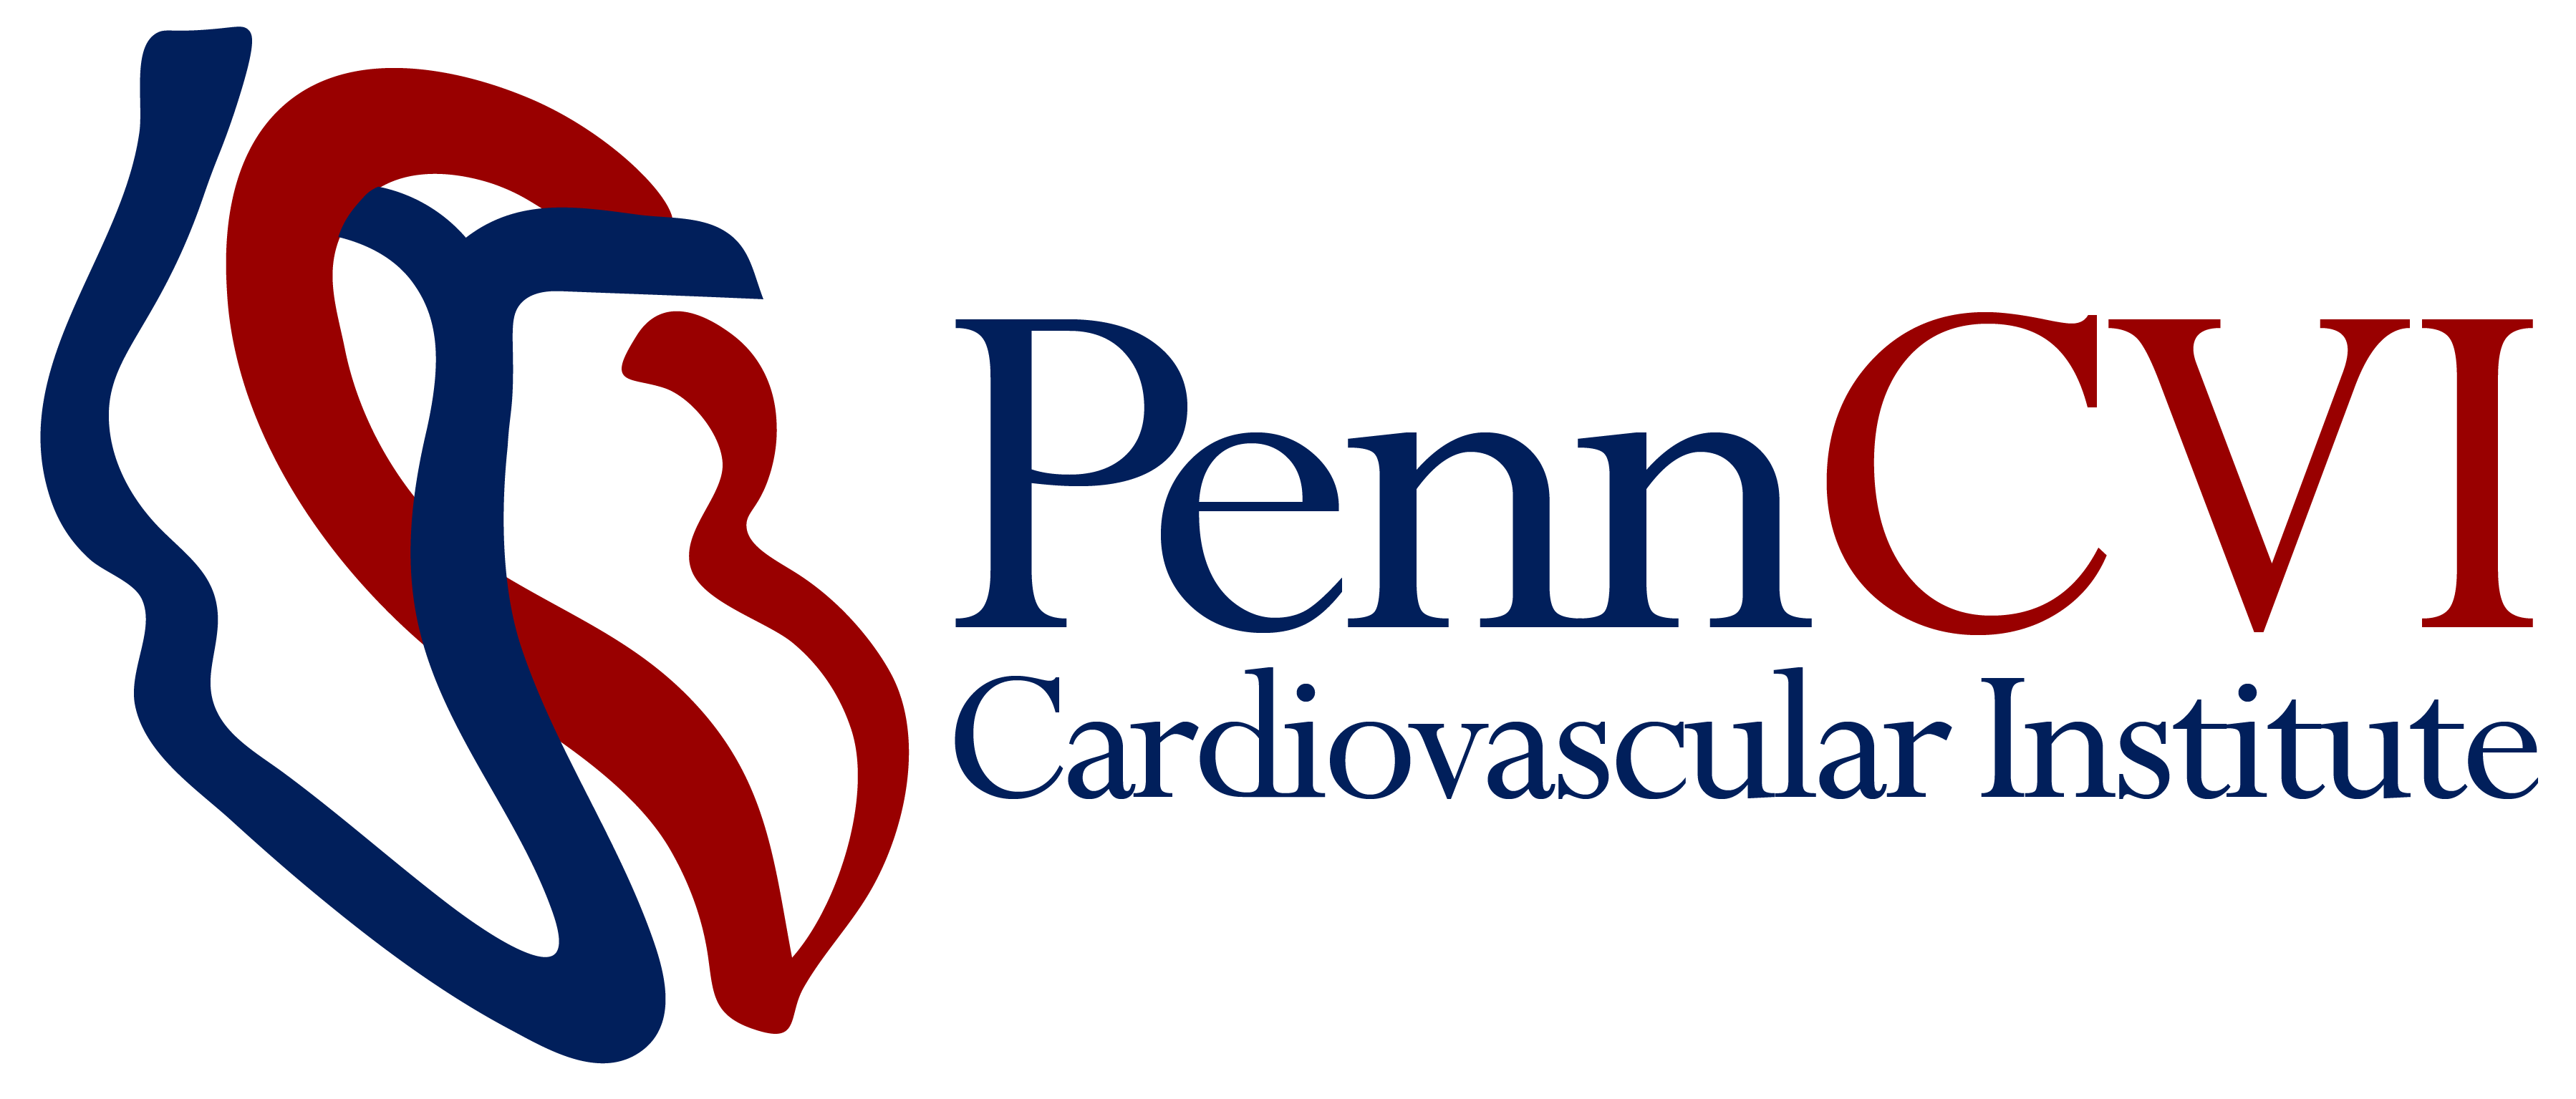 Contact Us Cardiovascular Institute Cvi Perelman School Of